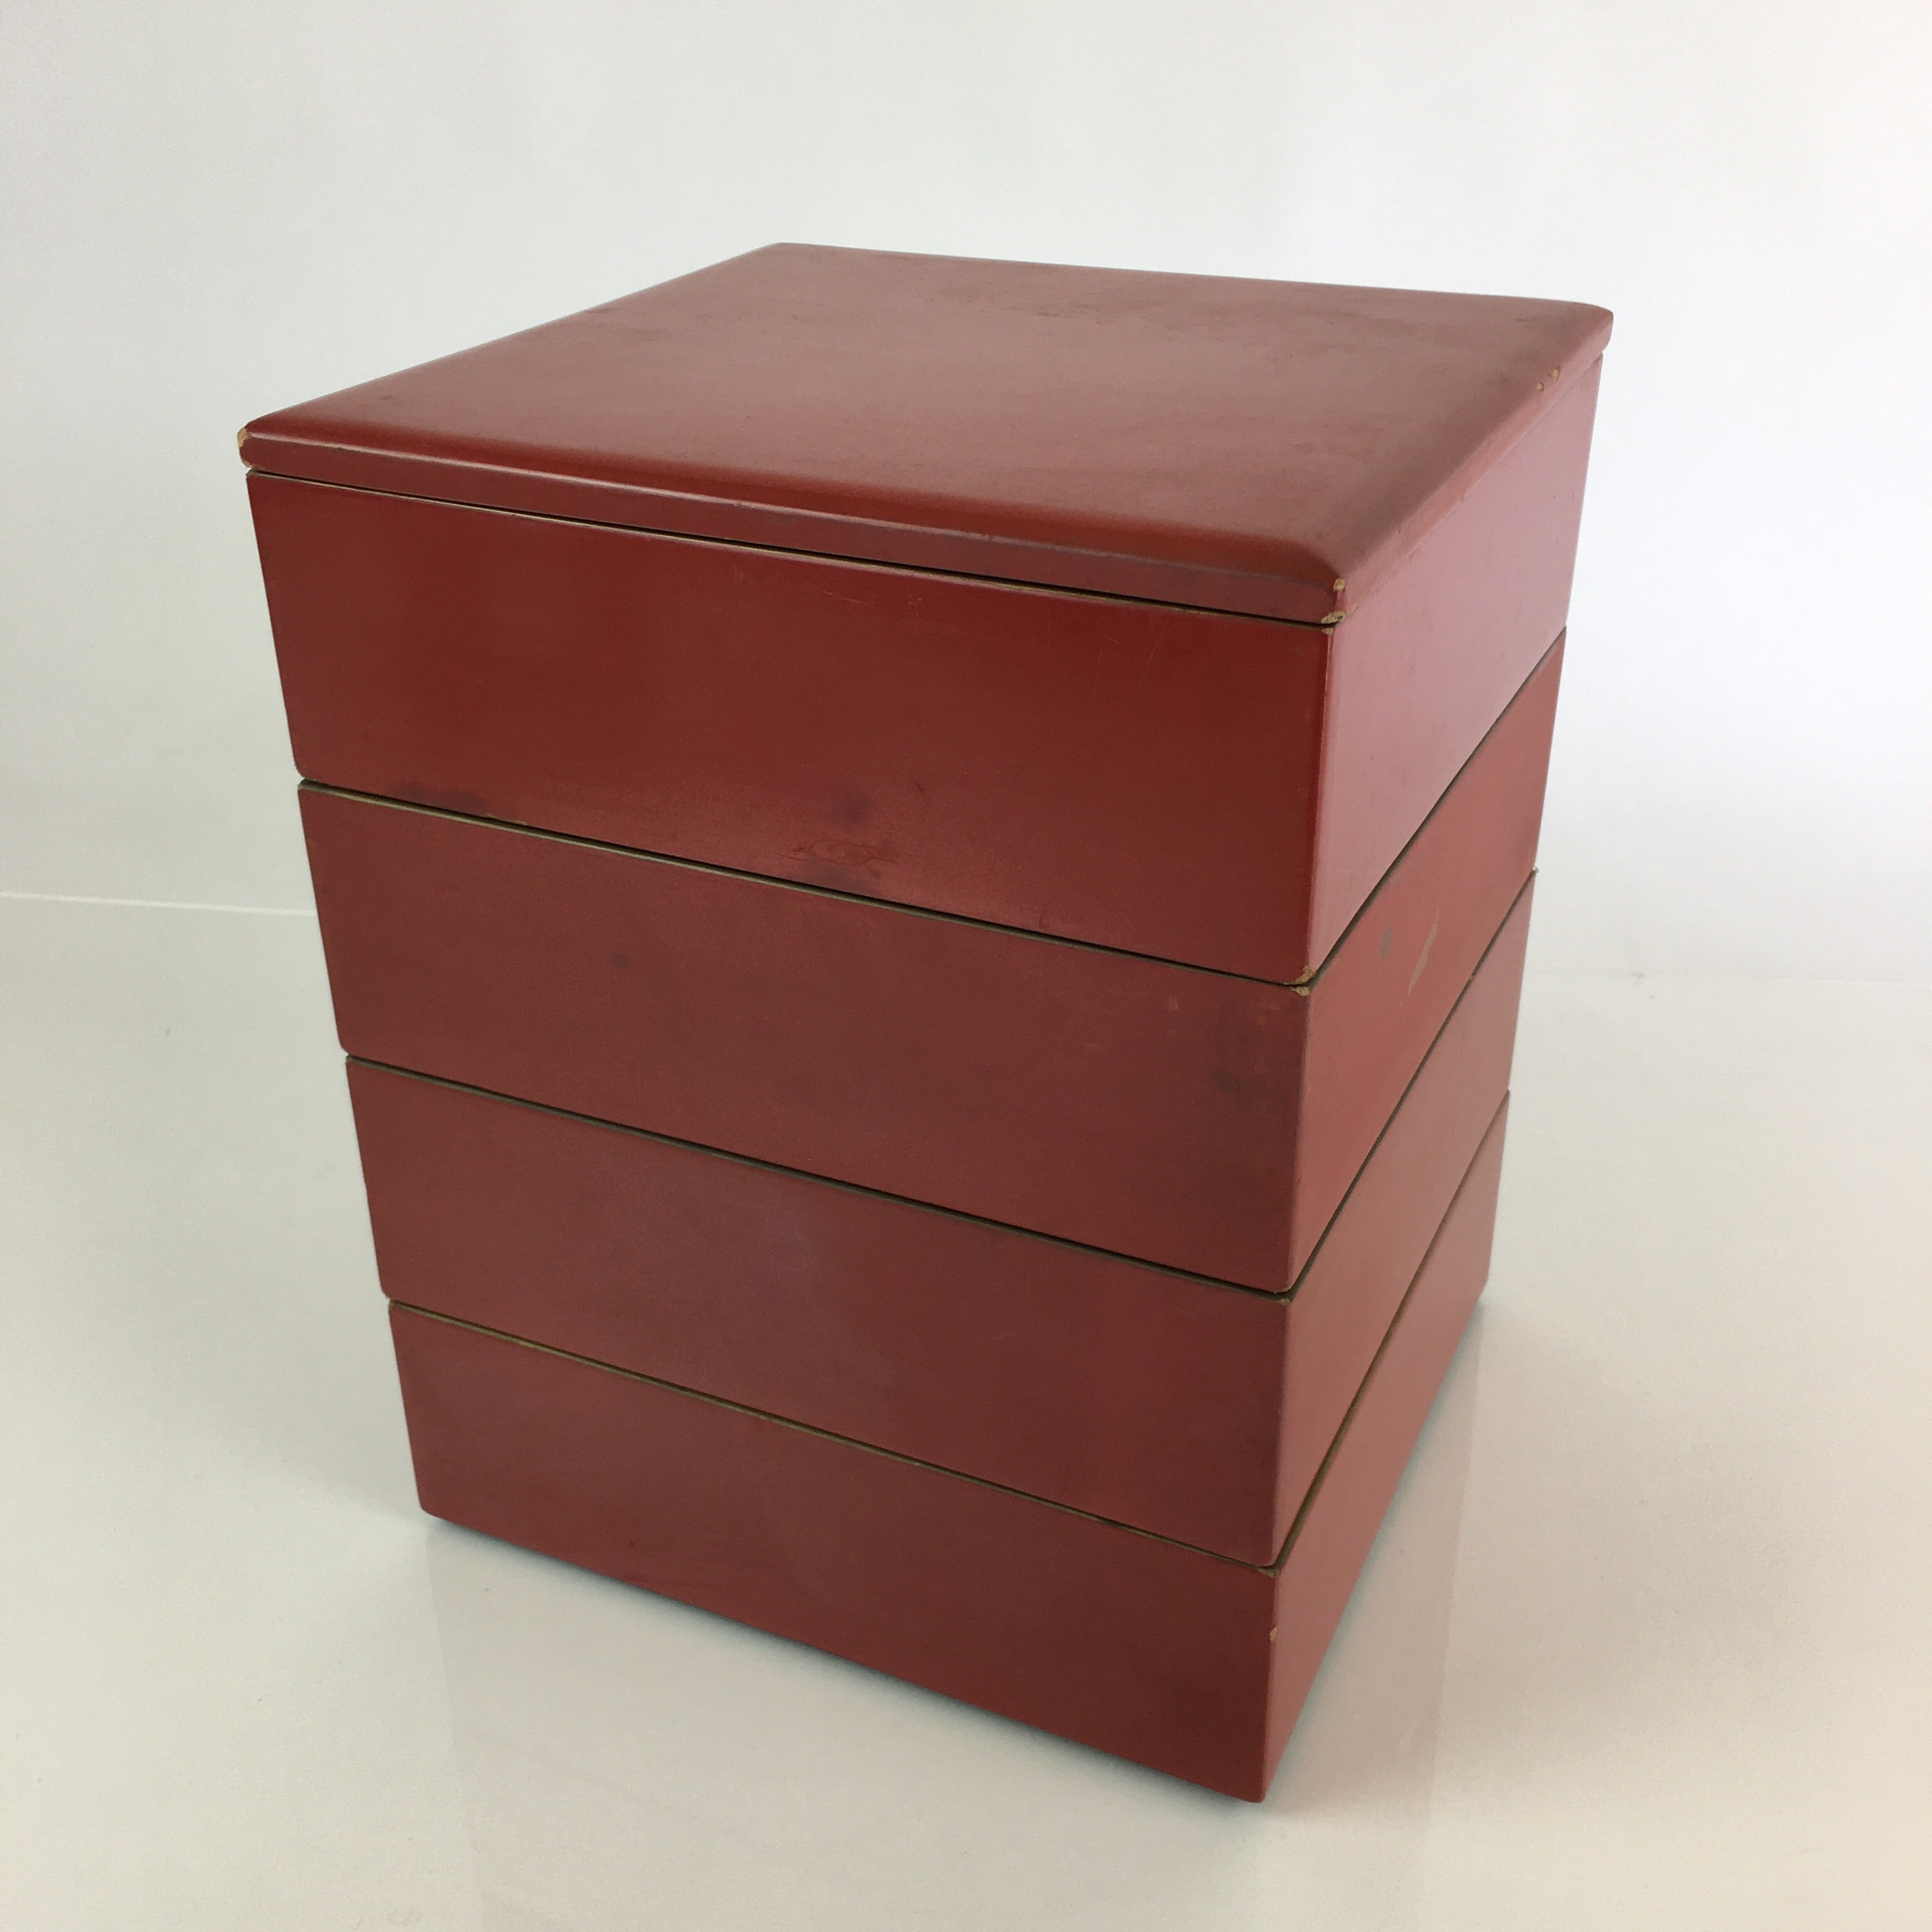 Japanese Lacquerware Bento Box Red 4 Tier Wood Vtg Jubako Set JB78